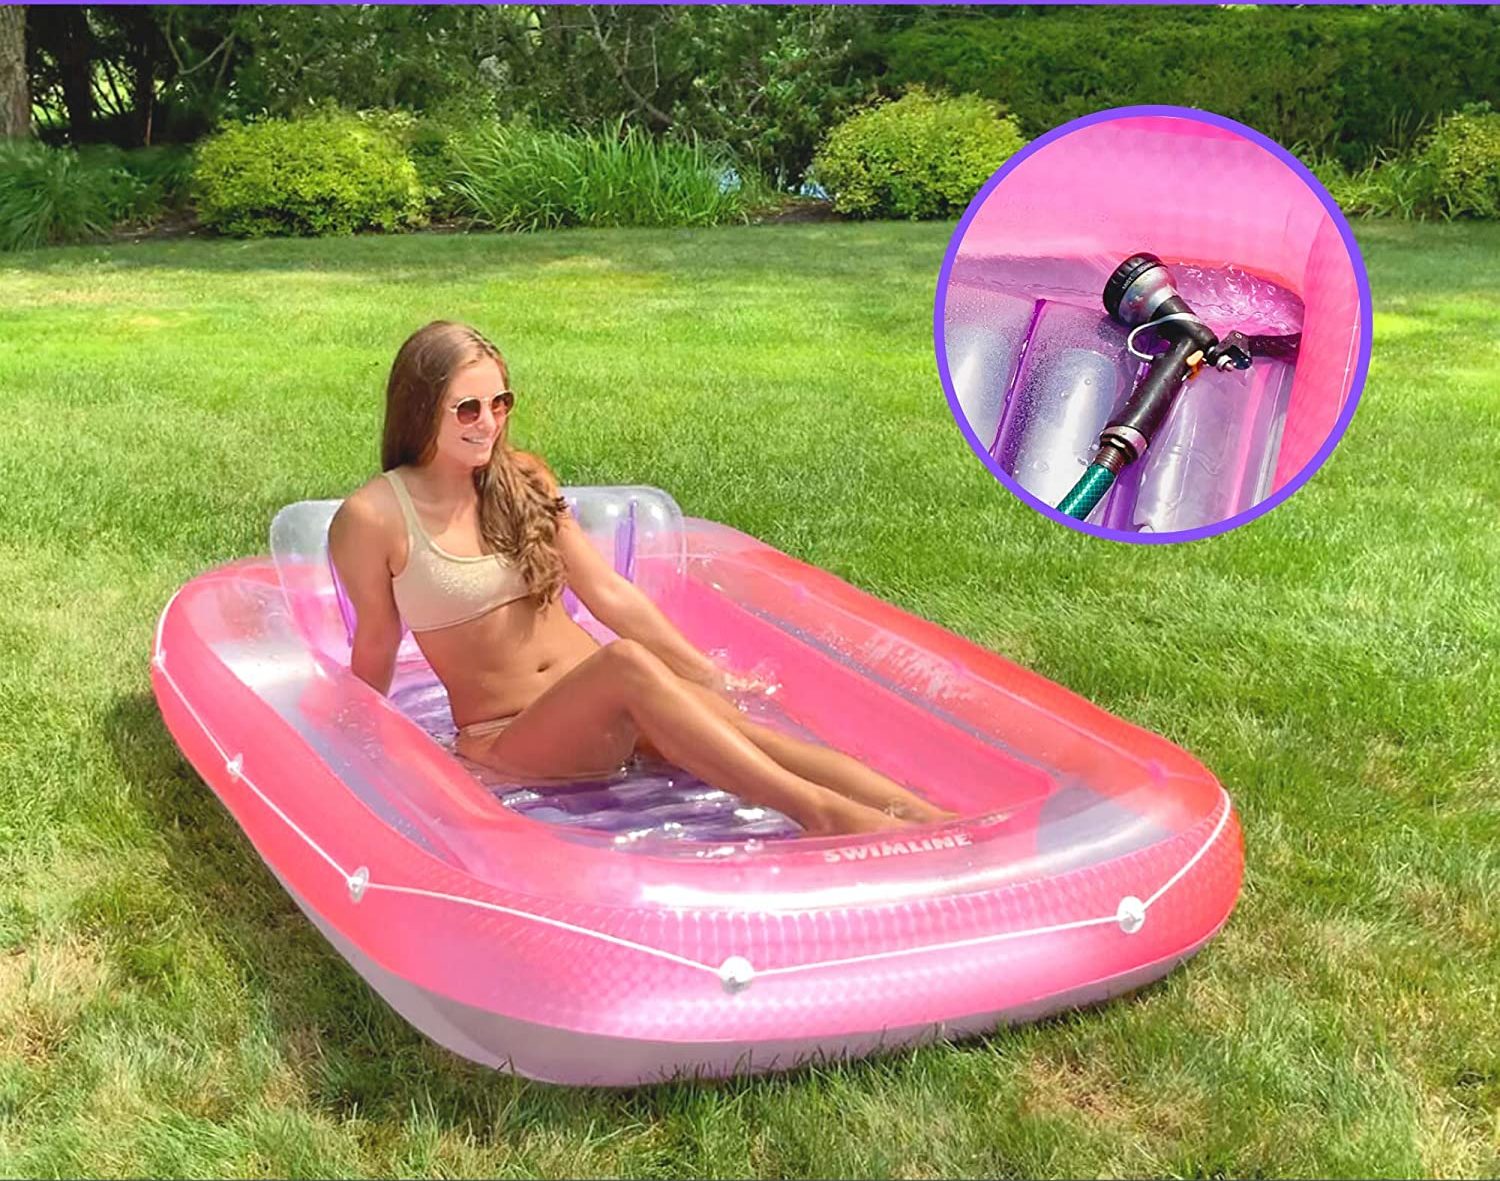 Woman sits in sunbathing tub in pink on lawn